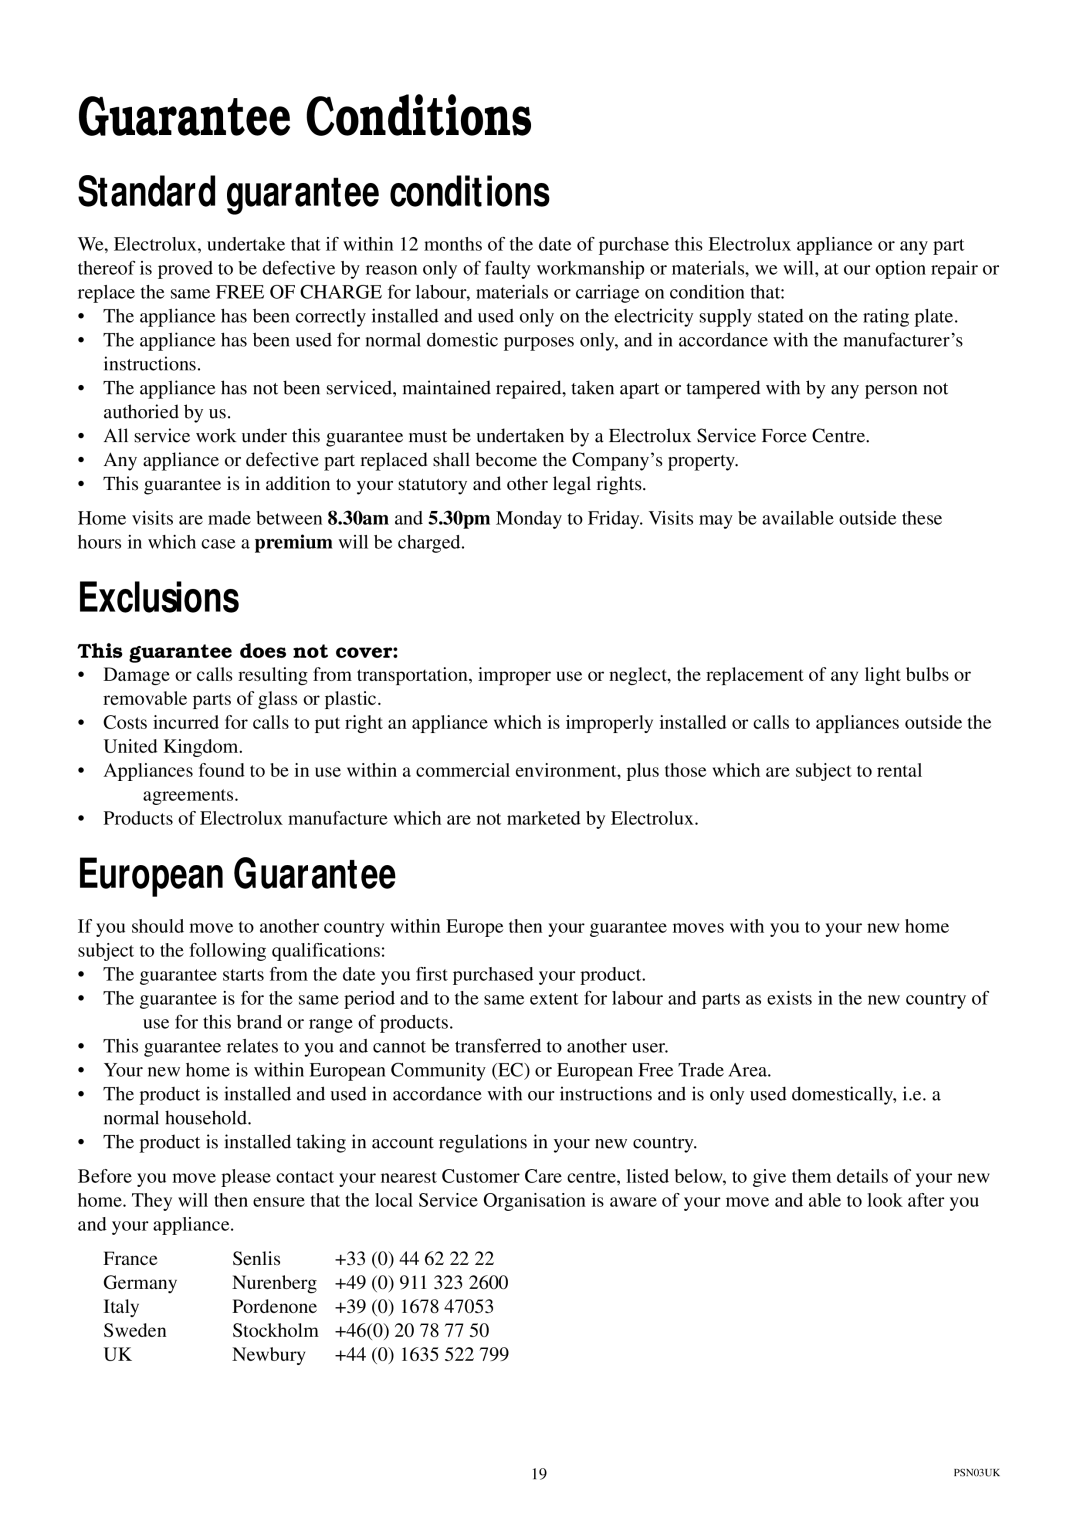 Electrolux ESI 600 manual Guarantee Conditions, Standard guarantee conditions, Exclusions, European Guarantee 